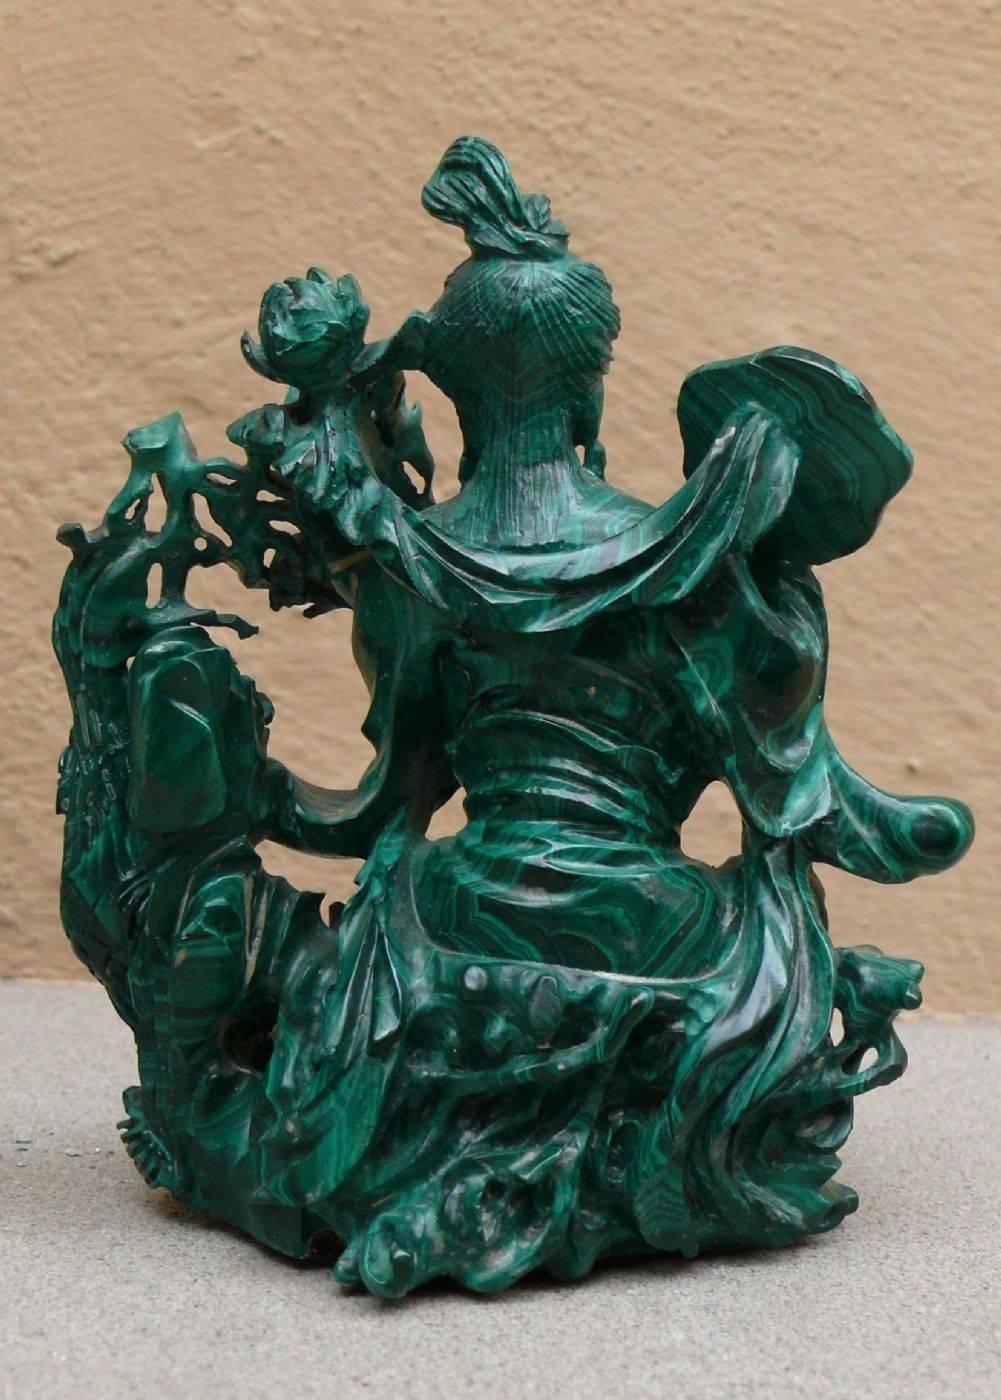 Statuette in malachite.
Chinese statuette of the 20th century
Measures cm H. 12 x 8.5 x 4.5.